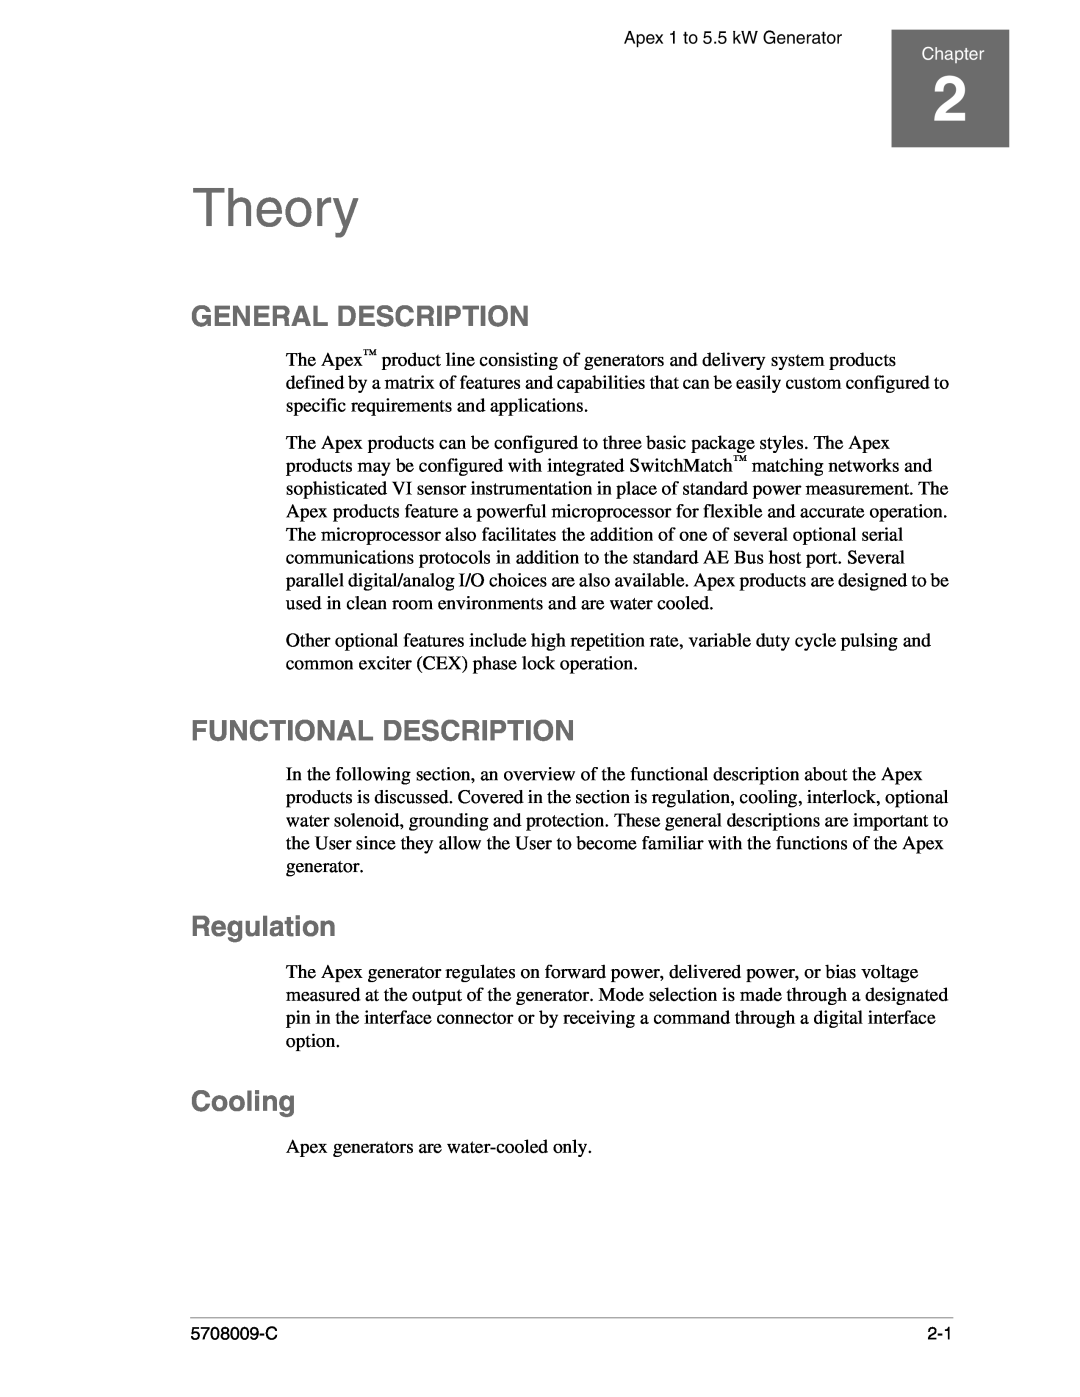 Apex Digital 5708009-C manual Theory, General Description, Functional Description, Regulation, Cooling 